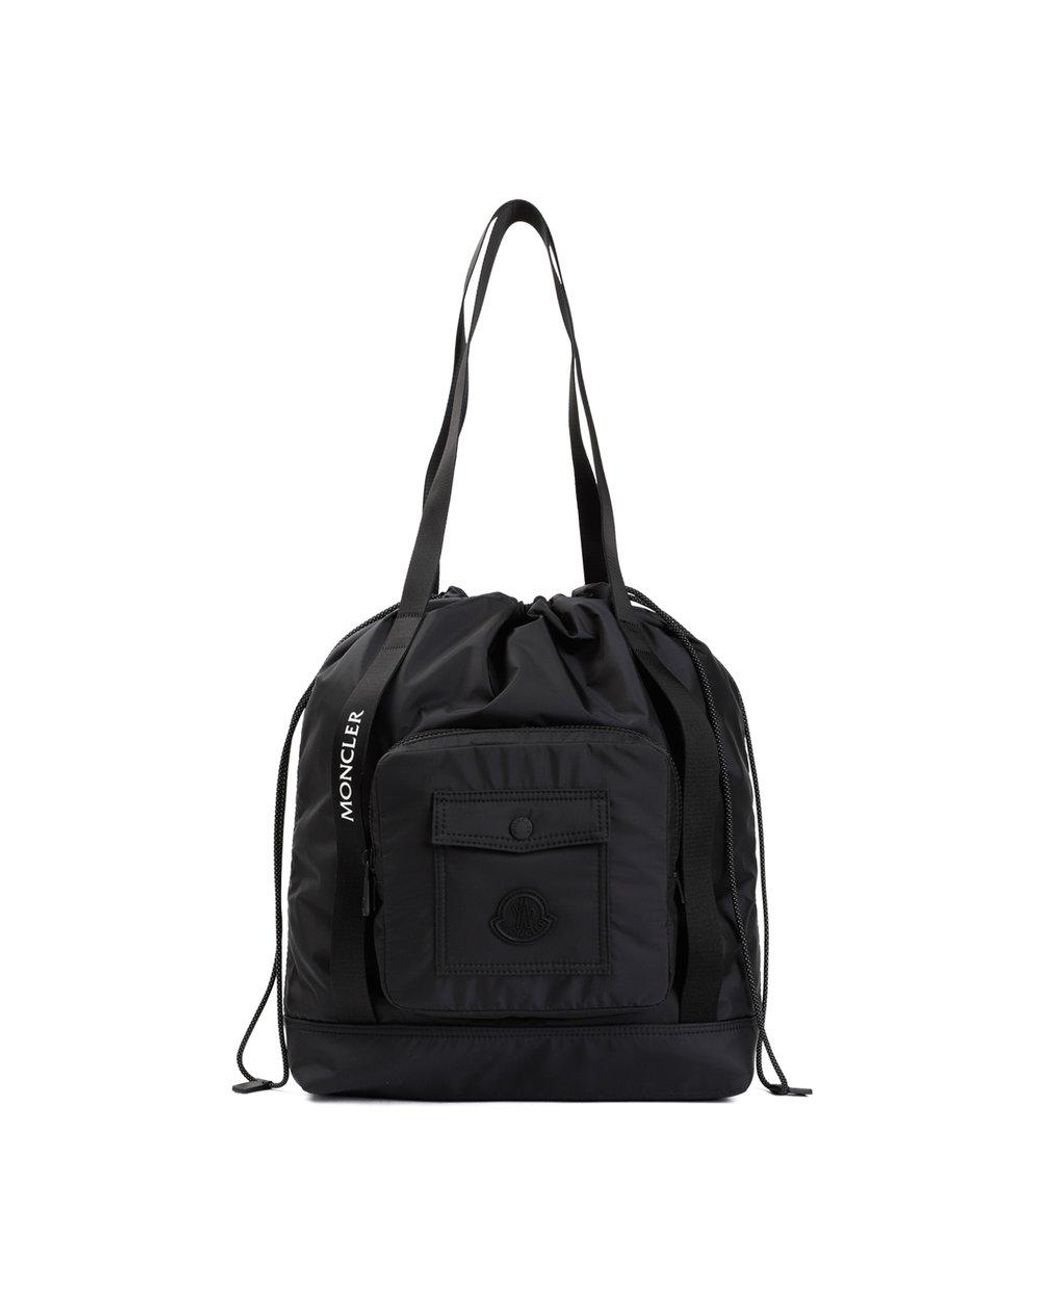 Moncler x adidas Originals Backpack Black - FW23 - US